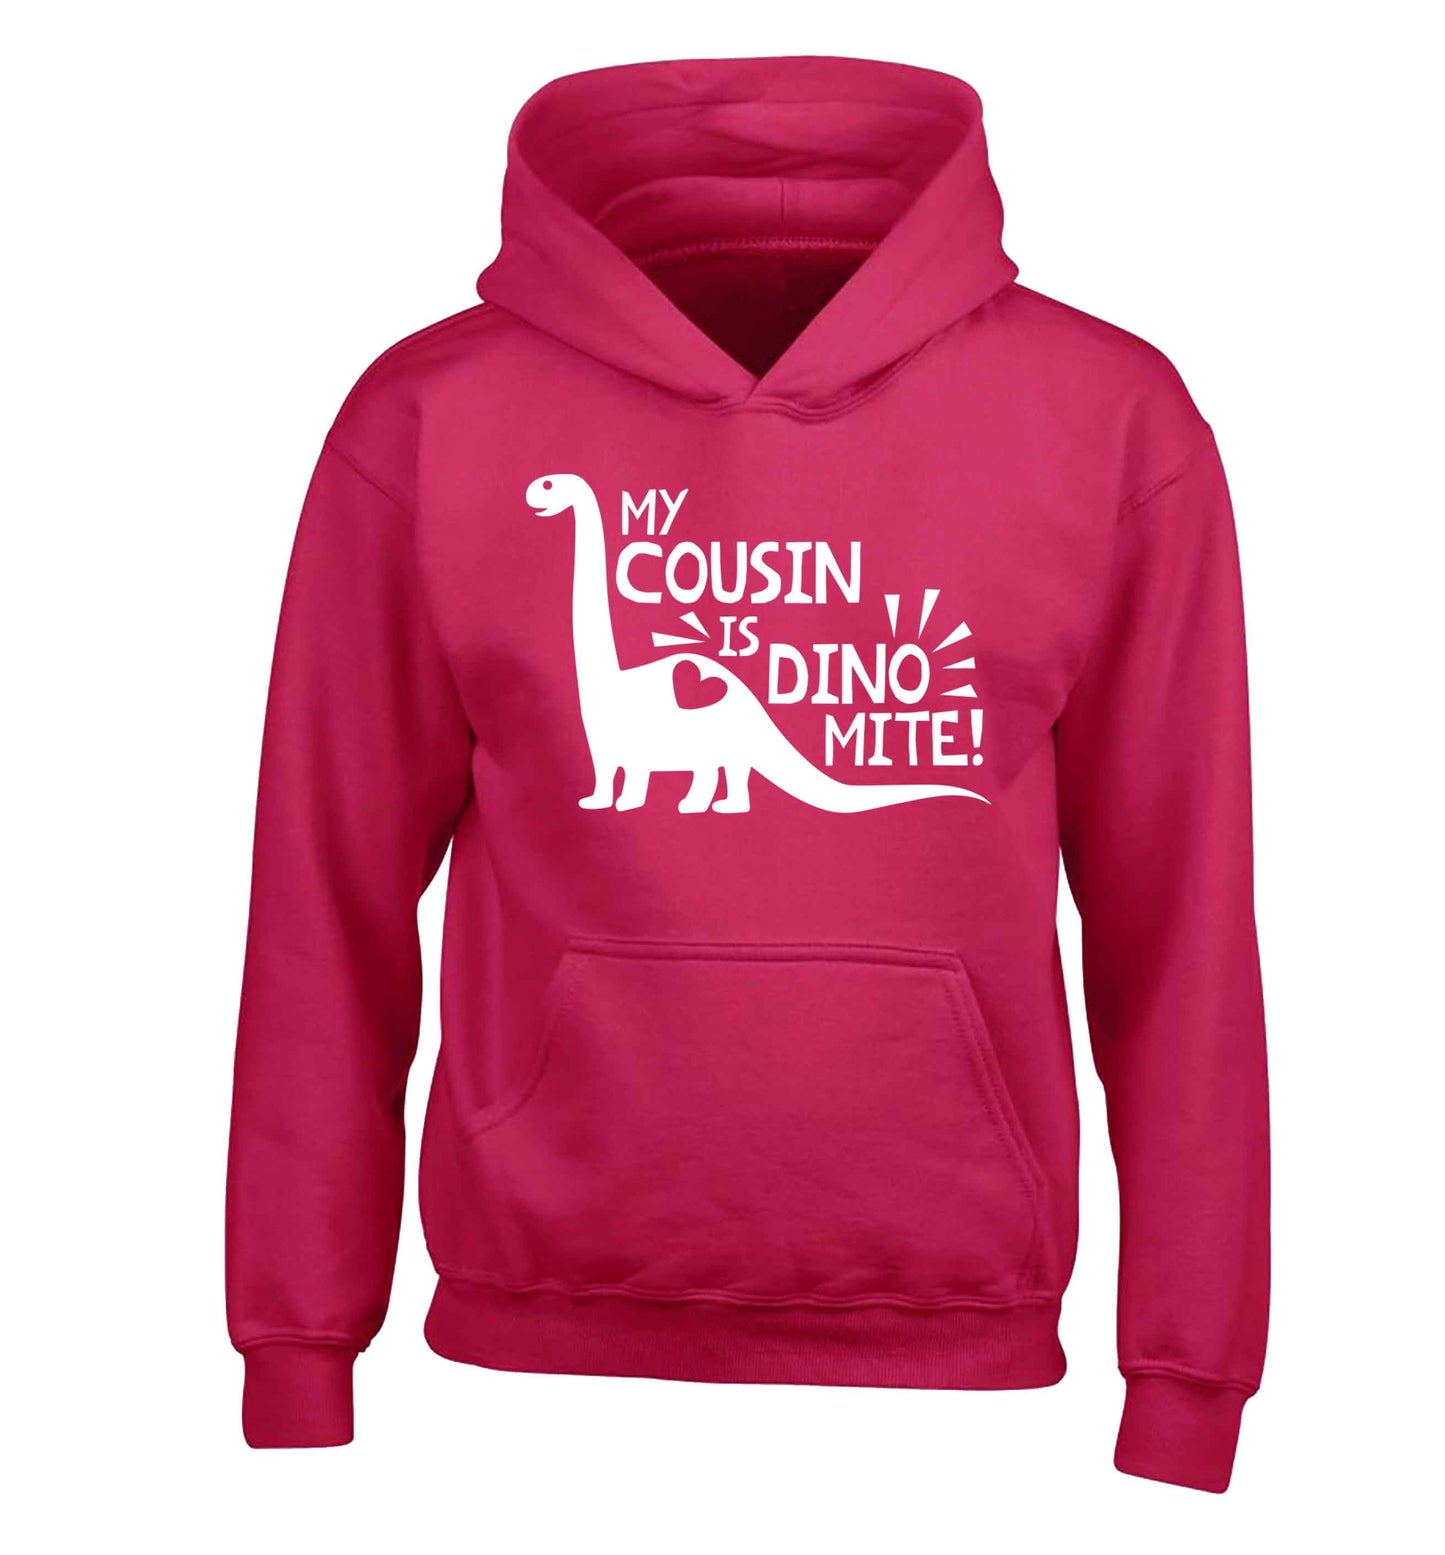 My cousin is dinomite! children's pink hoodie 12-13 Years